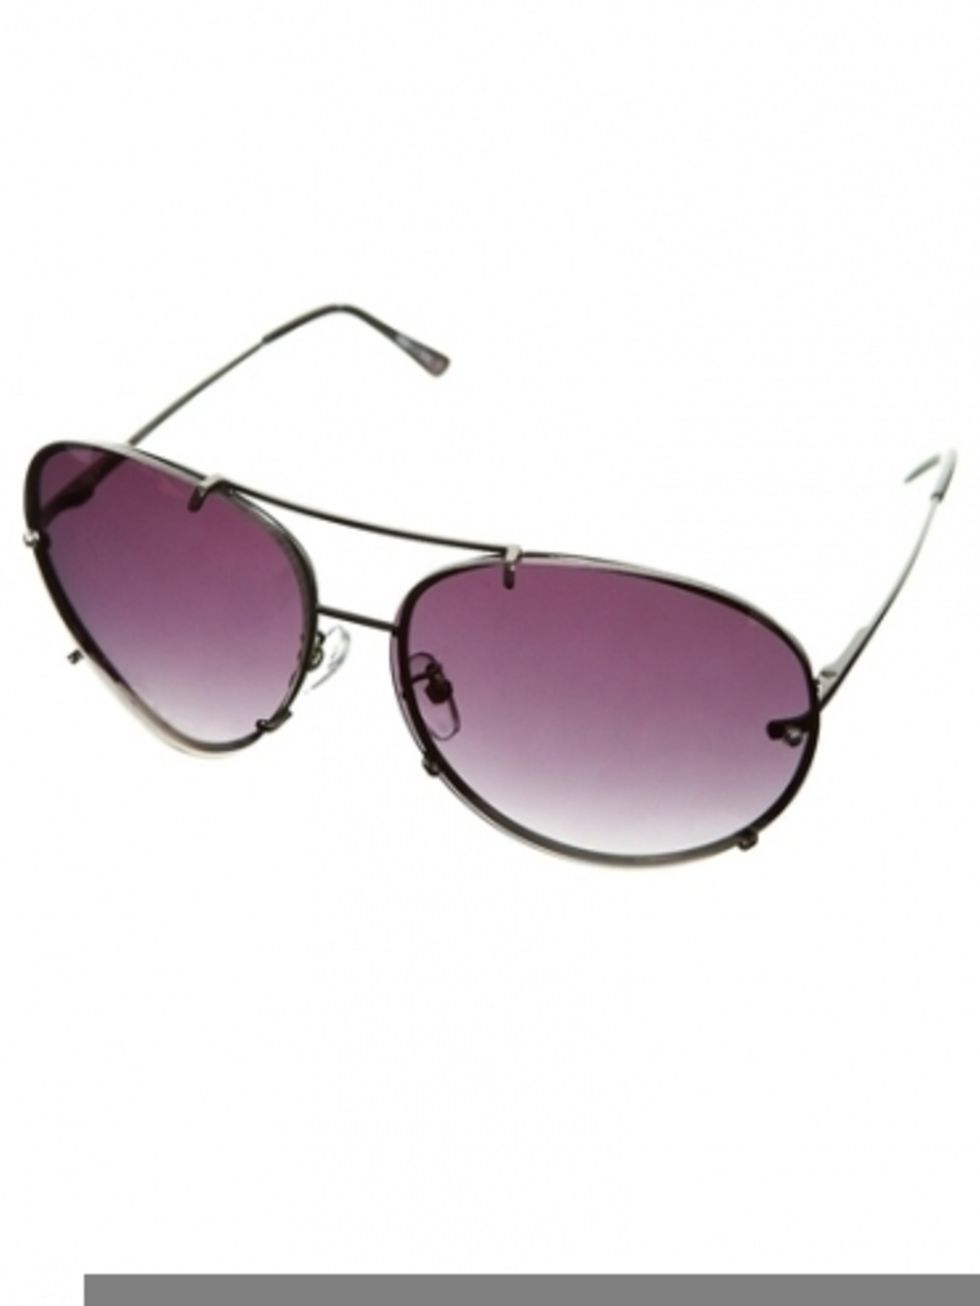 Eyewear, Glasses, Vision care, Product, Brown, Sunglasses, Violet, Purple, Magenta, Photograph, 